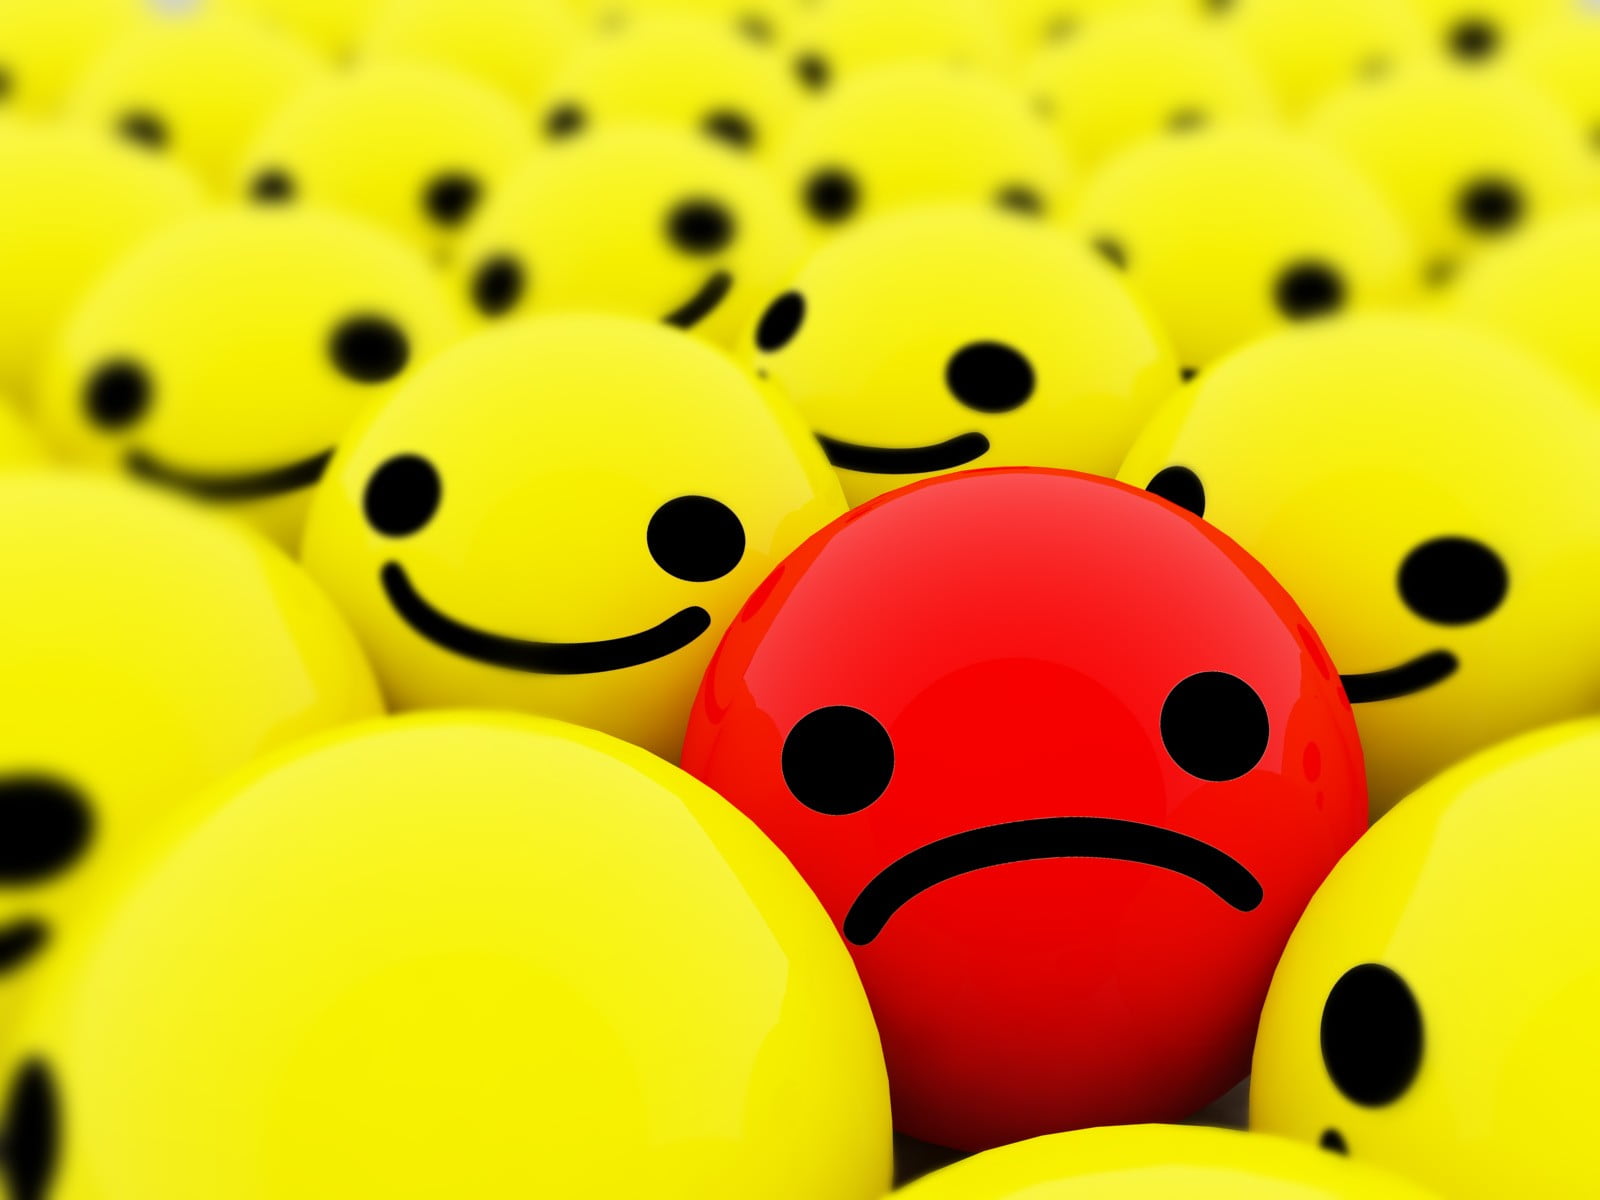 1920x1080 resolution | yellow smile and red sad emoticon illustration ...